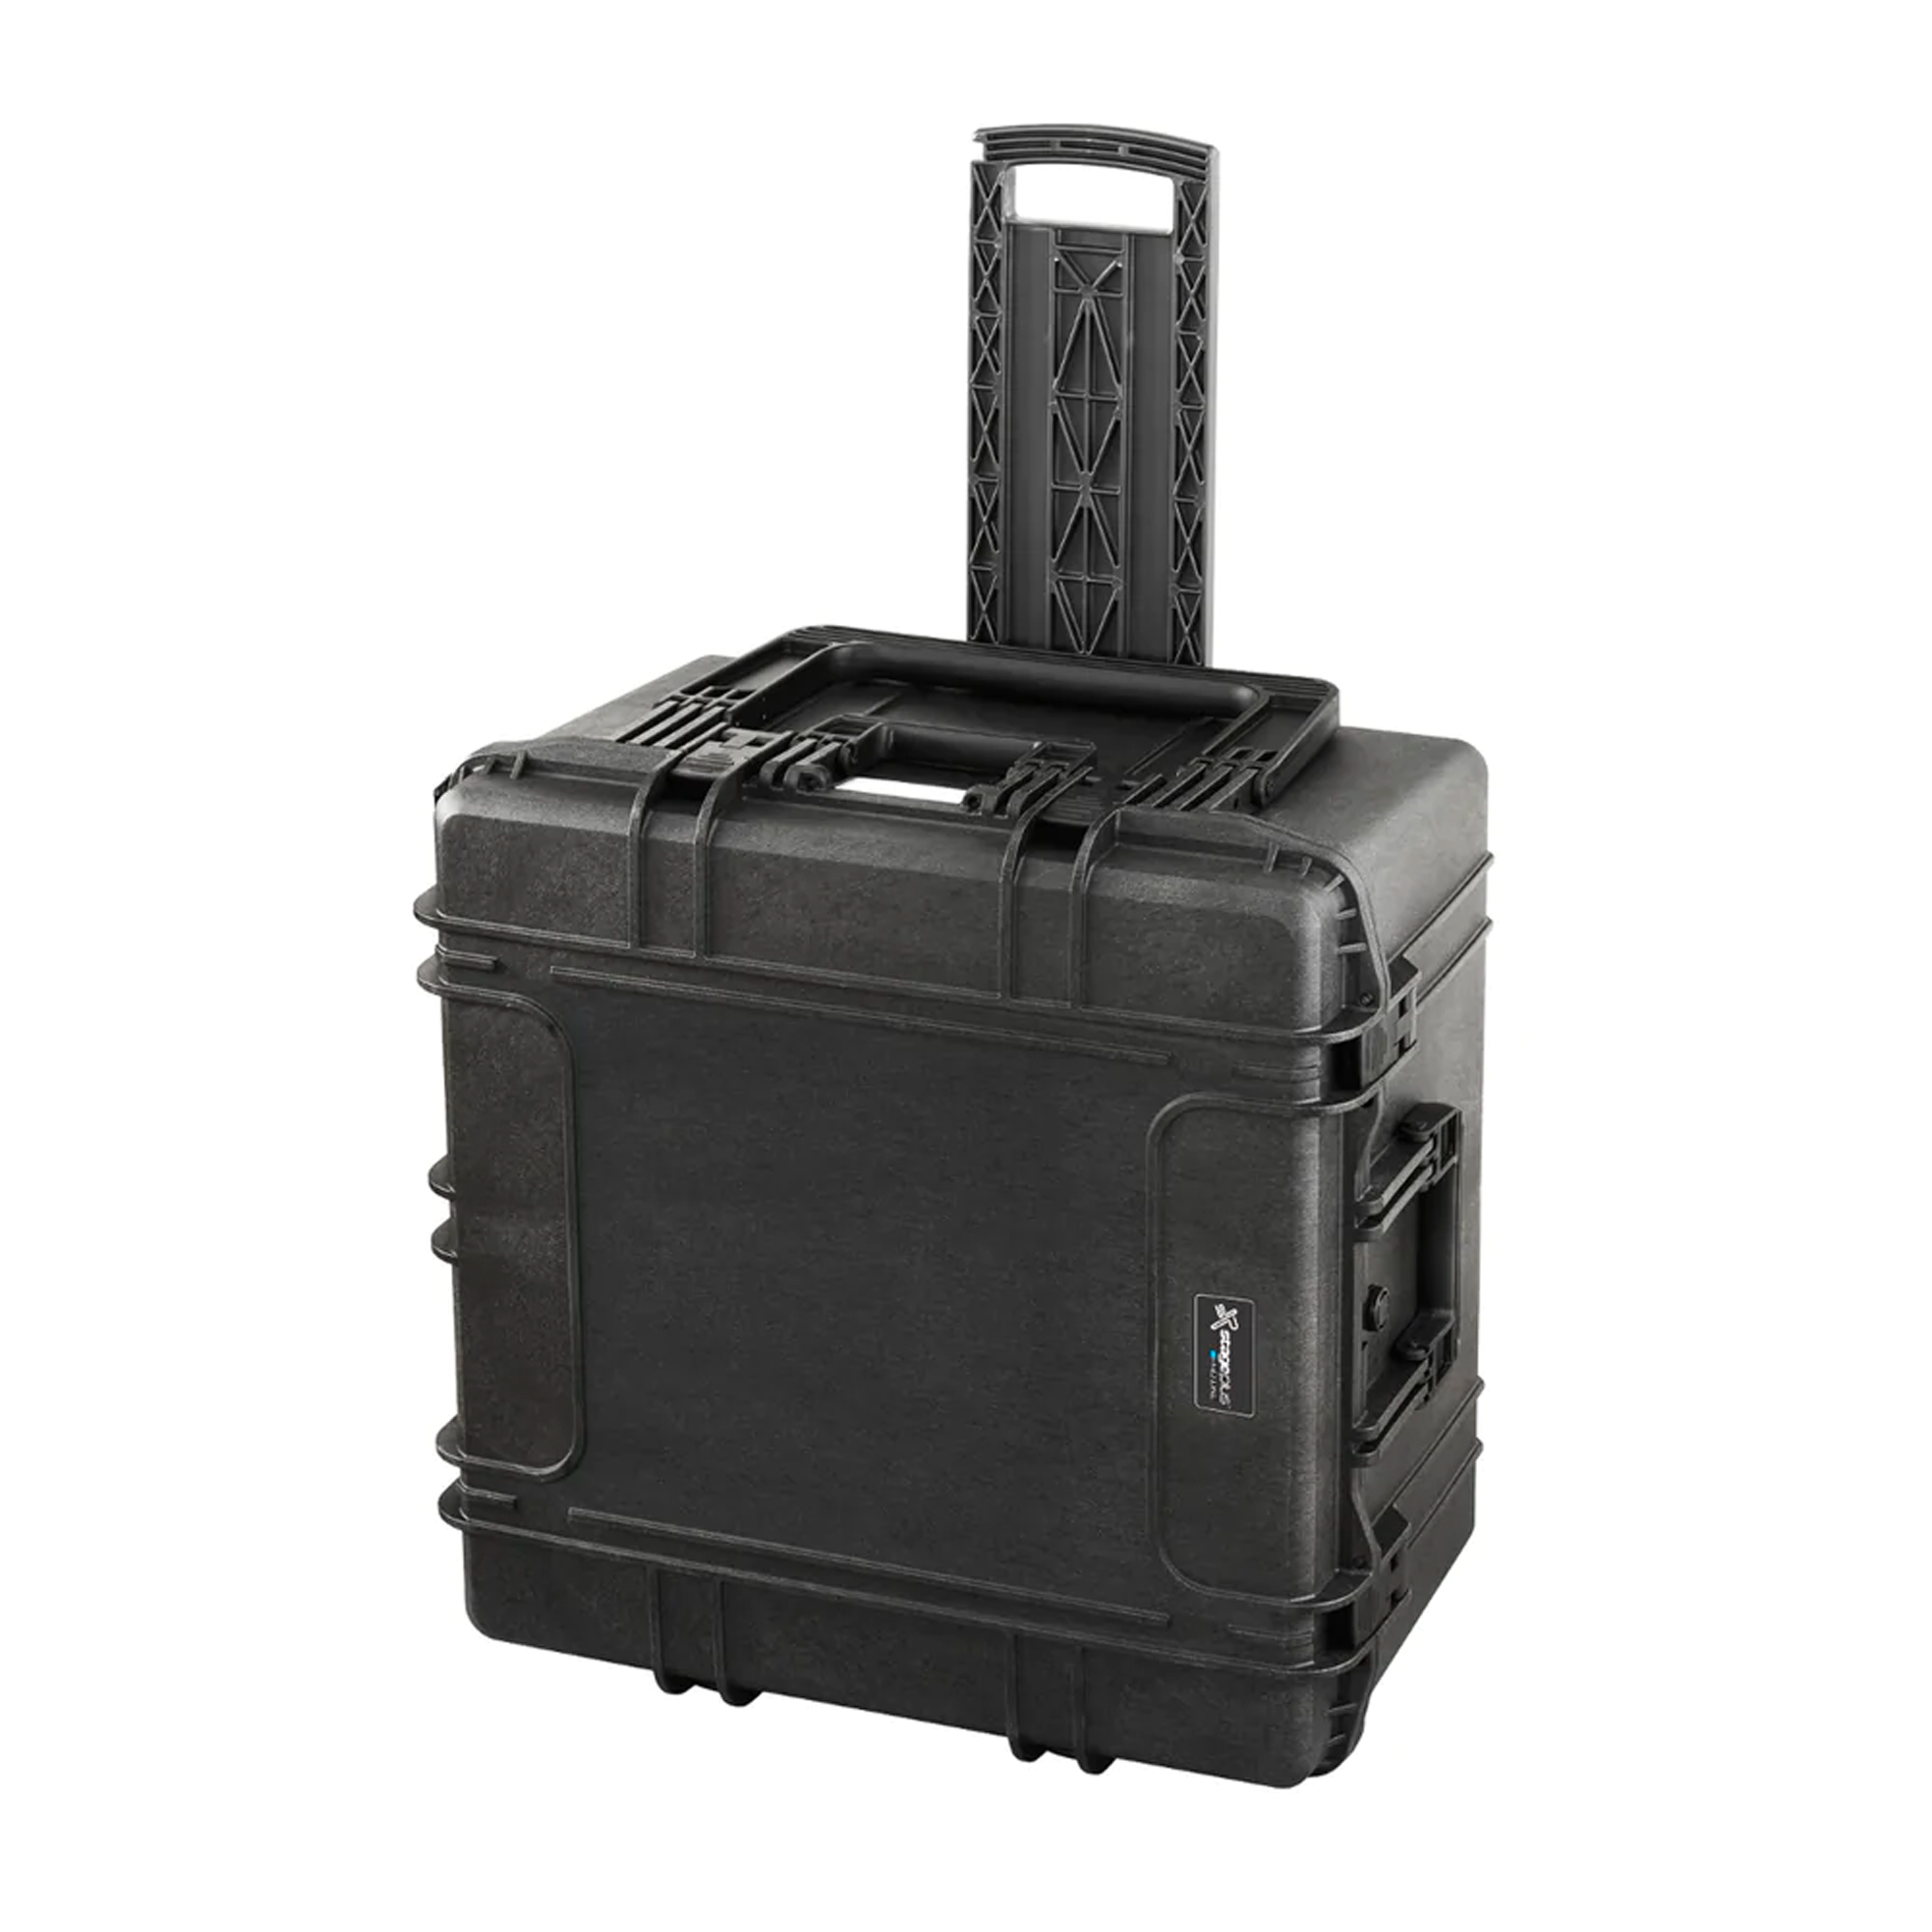 Stage Plus PRO 615STR Black Trolley Case, Cubed Foams, ID: L615xW615xH360mm